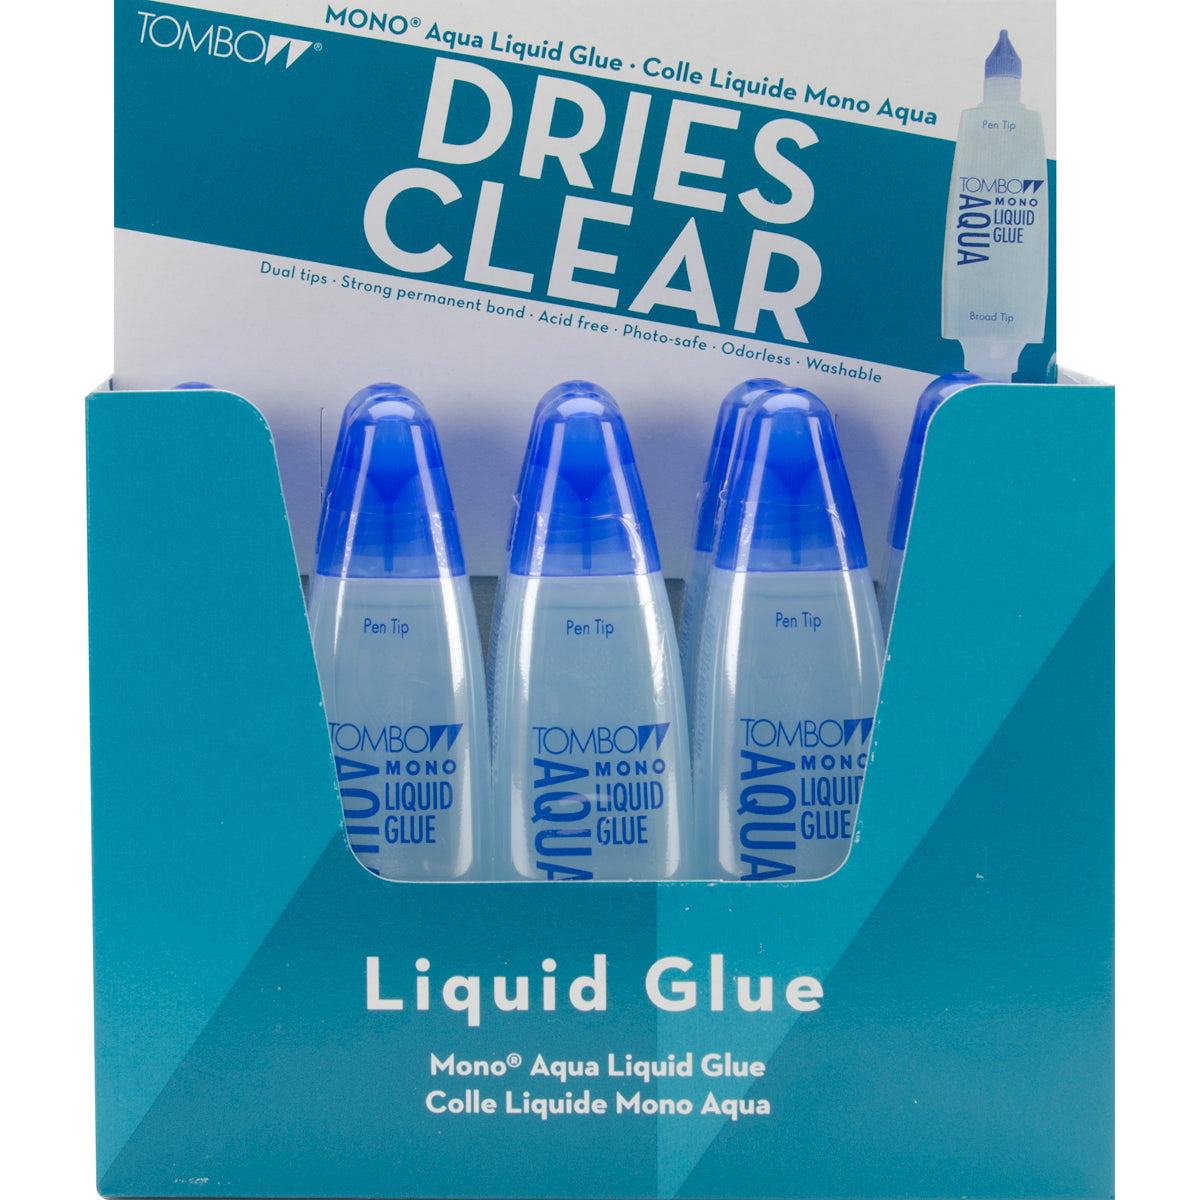 Клей аква. Aqua mono Liquid Glue. Liquid Glue клей. Liquid Glue клей для бумаги. Аква арт жидкий клей.